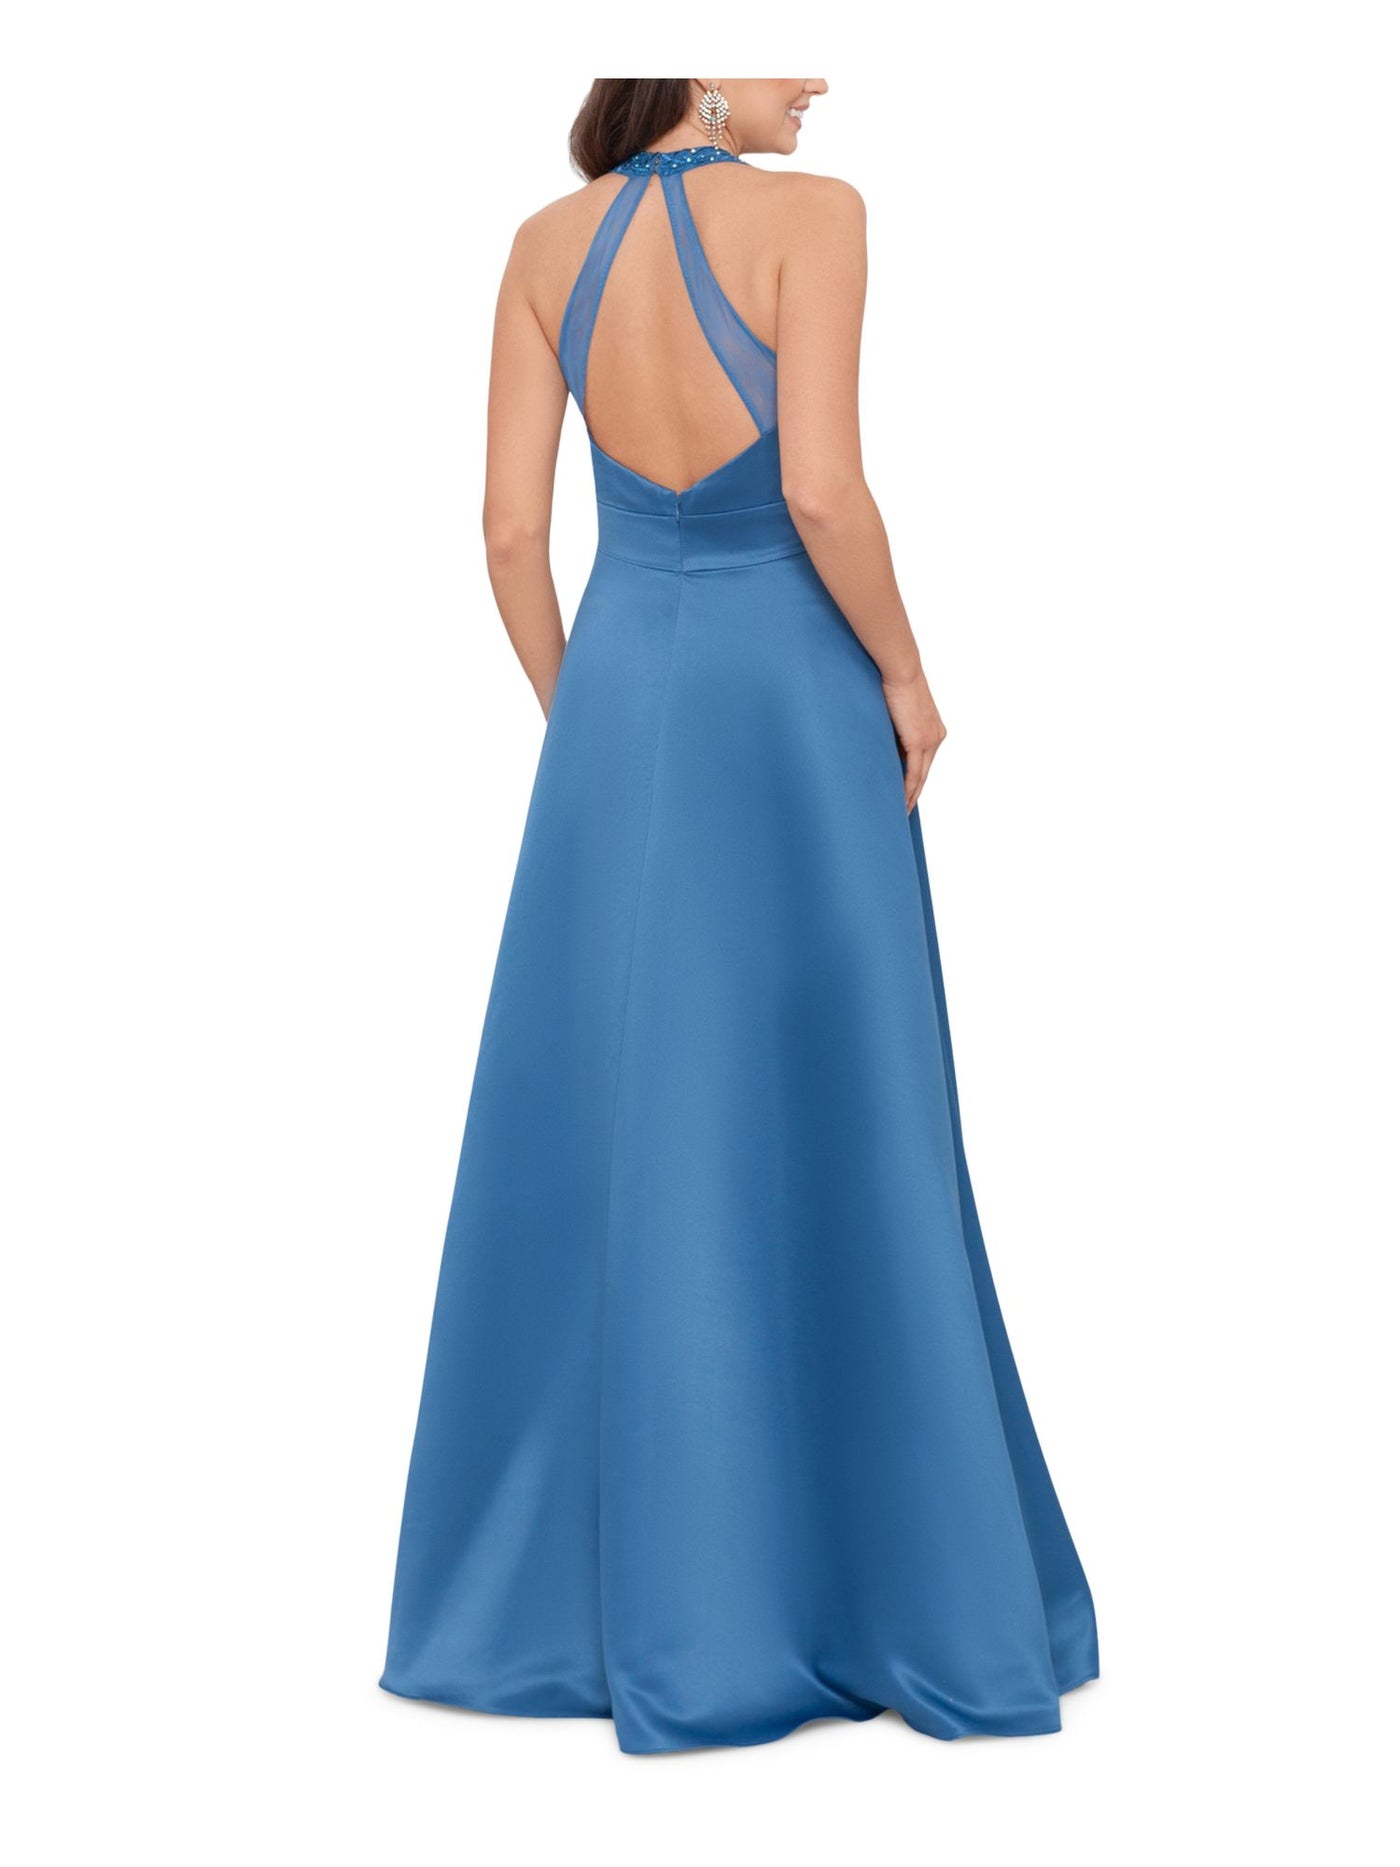 BLONDIE Womens Blue Embellished Zippered Plunging V-neck Mesh Back Straps Sleeveless Full-Length Prom Fit + Flare Dress Juniors 15